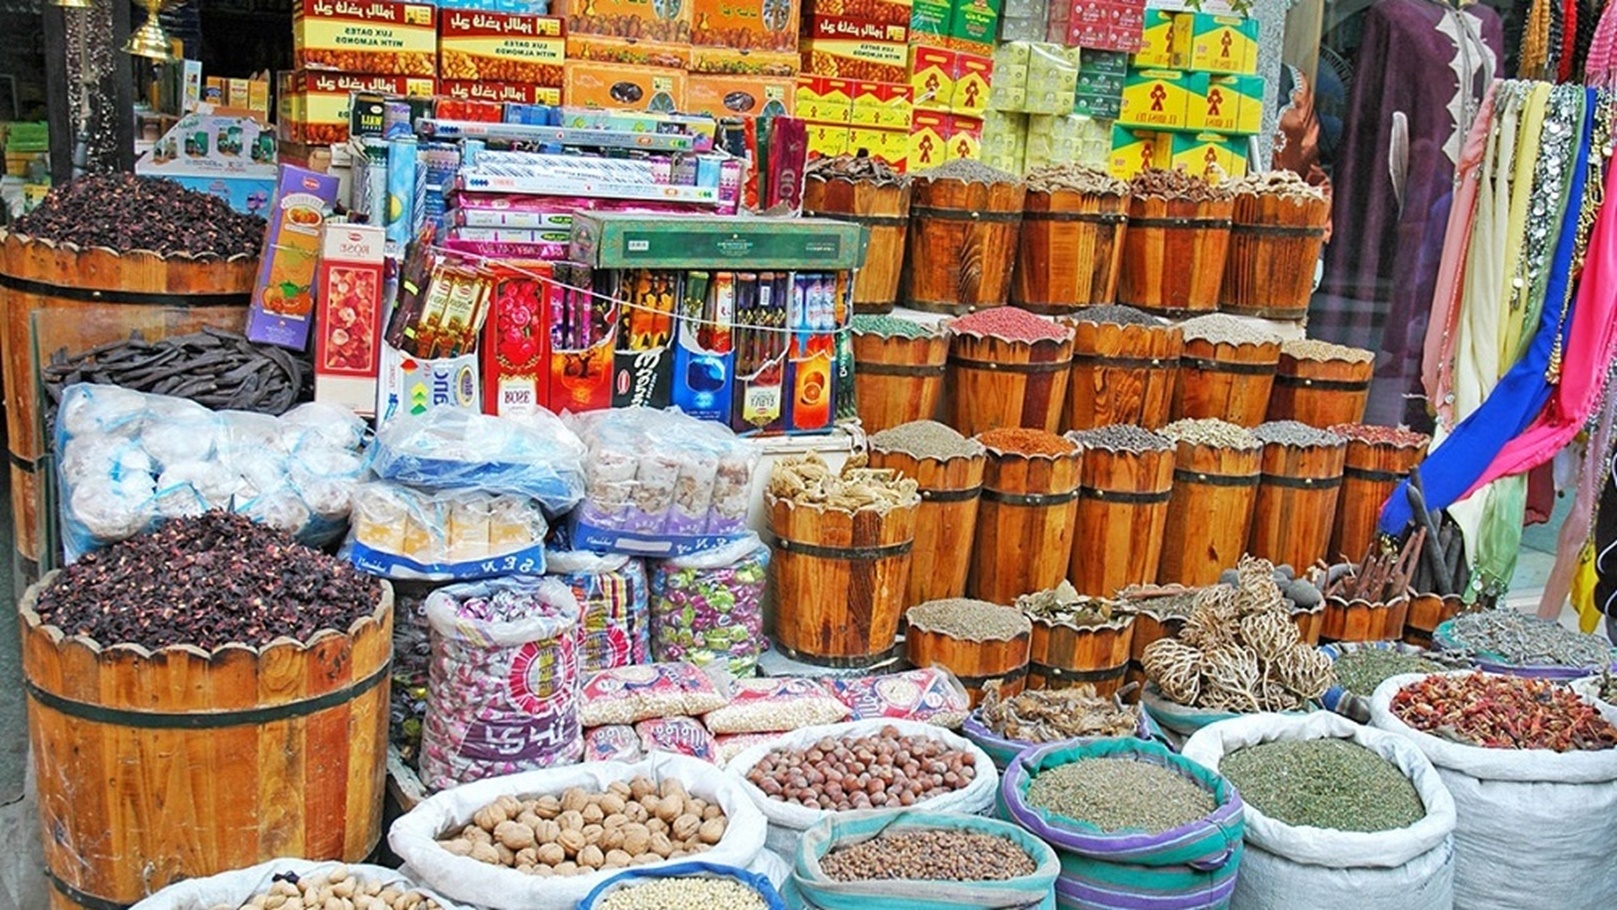 Egyptian markets